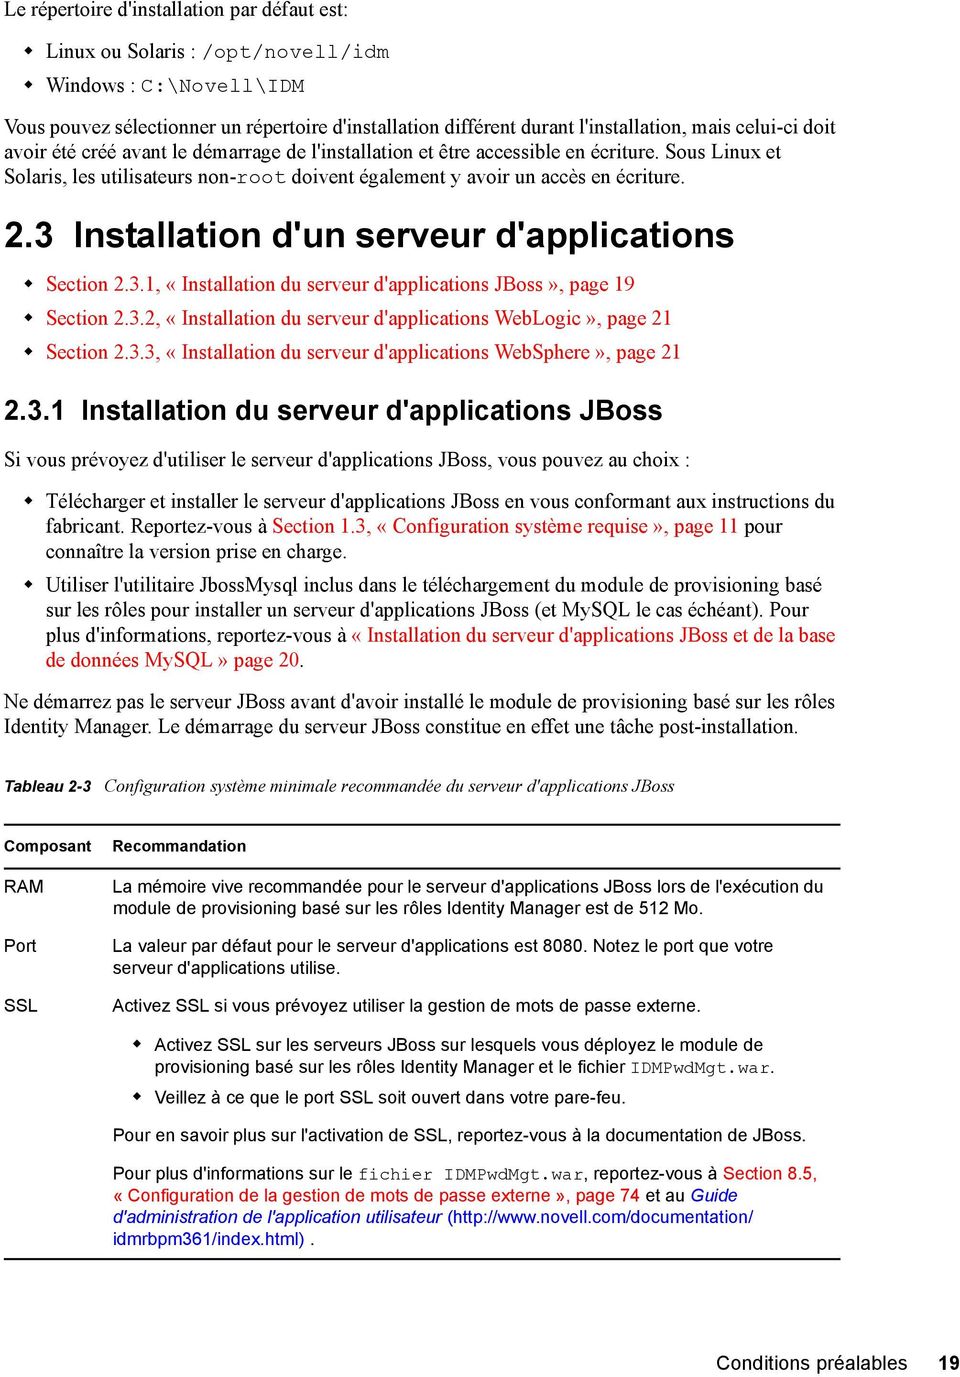 3 Installation d'un serveur d'applications Section 2.3.1, «Installation du serveur d'applications JBoss», page 19 Section 2.3.2, «Installation du serveur d'applications WebLogic», page 21 Section 2.3.3, «Installation du serveur d'applications WebSphere», page 21 2.